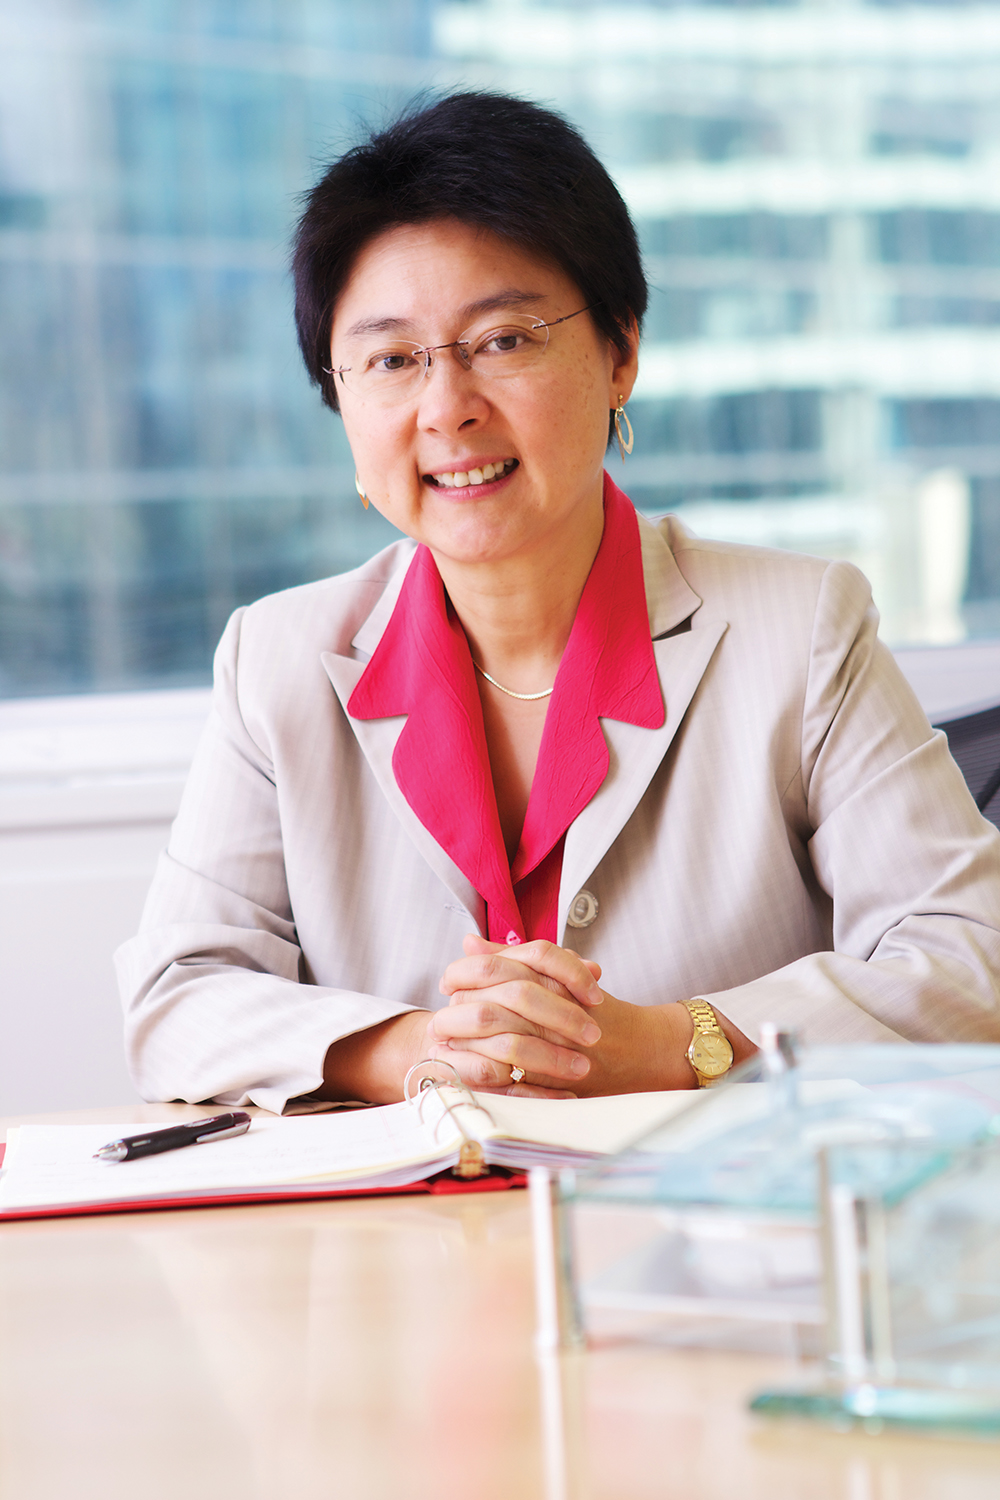 Dr. Fei-Fei Liu